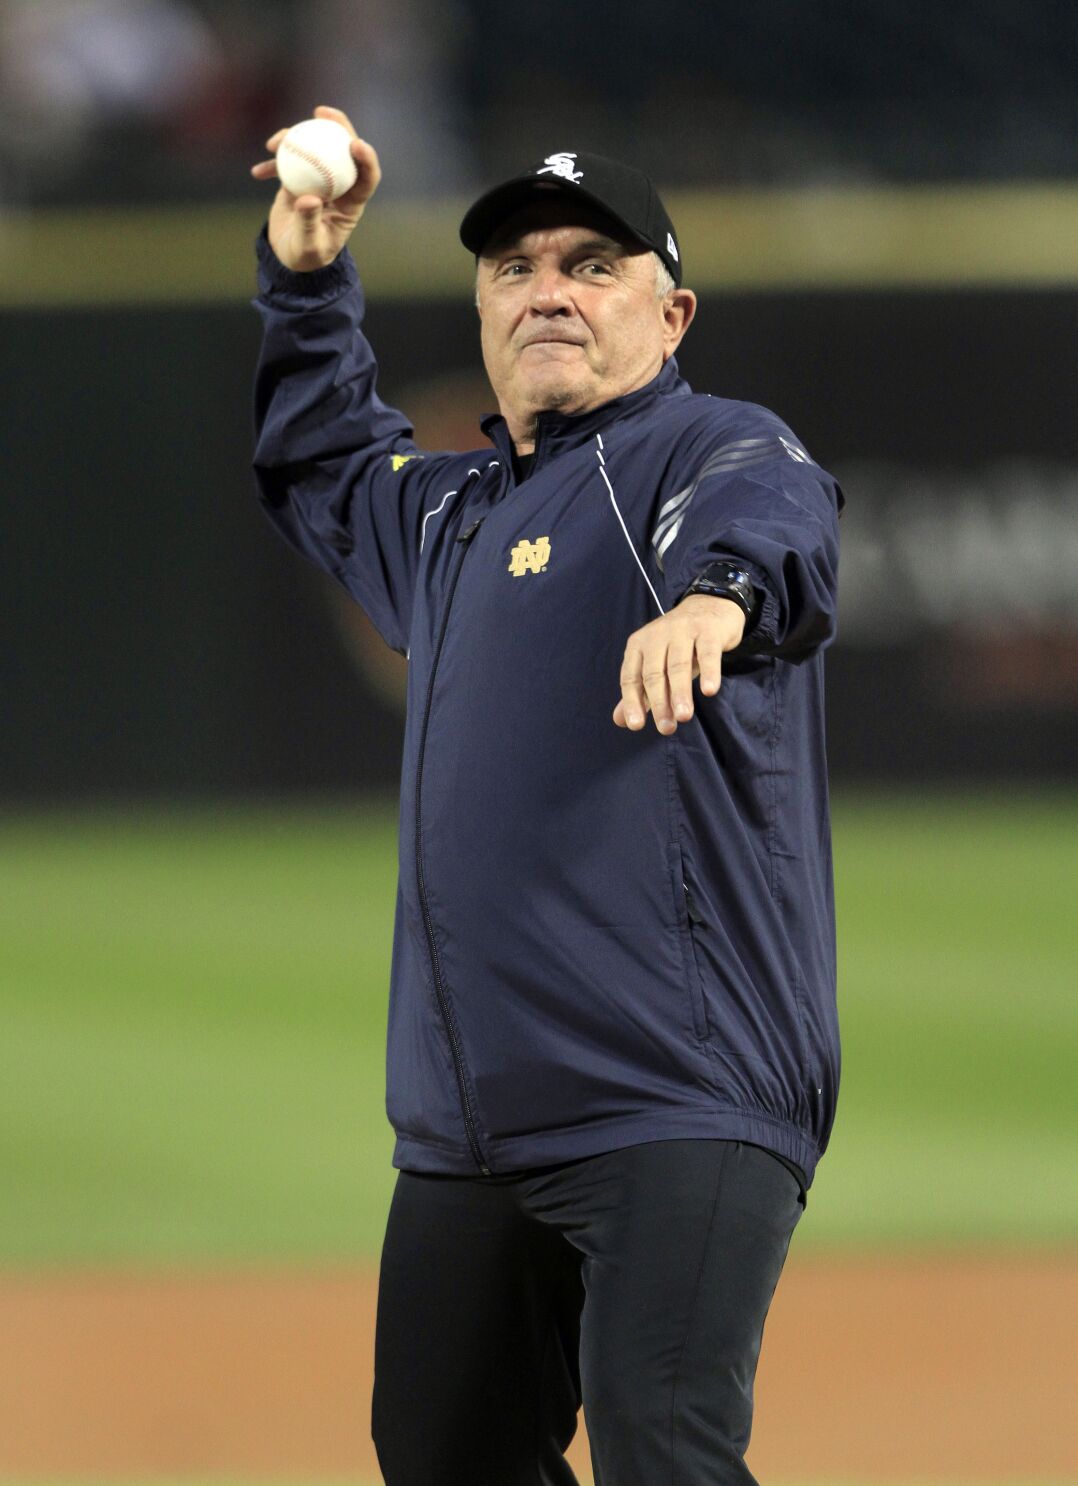 Rudy holding a baseball